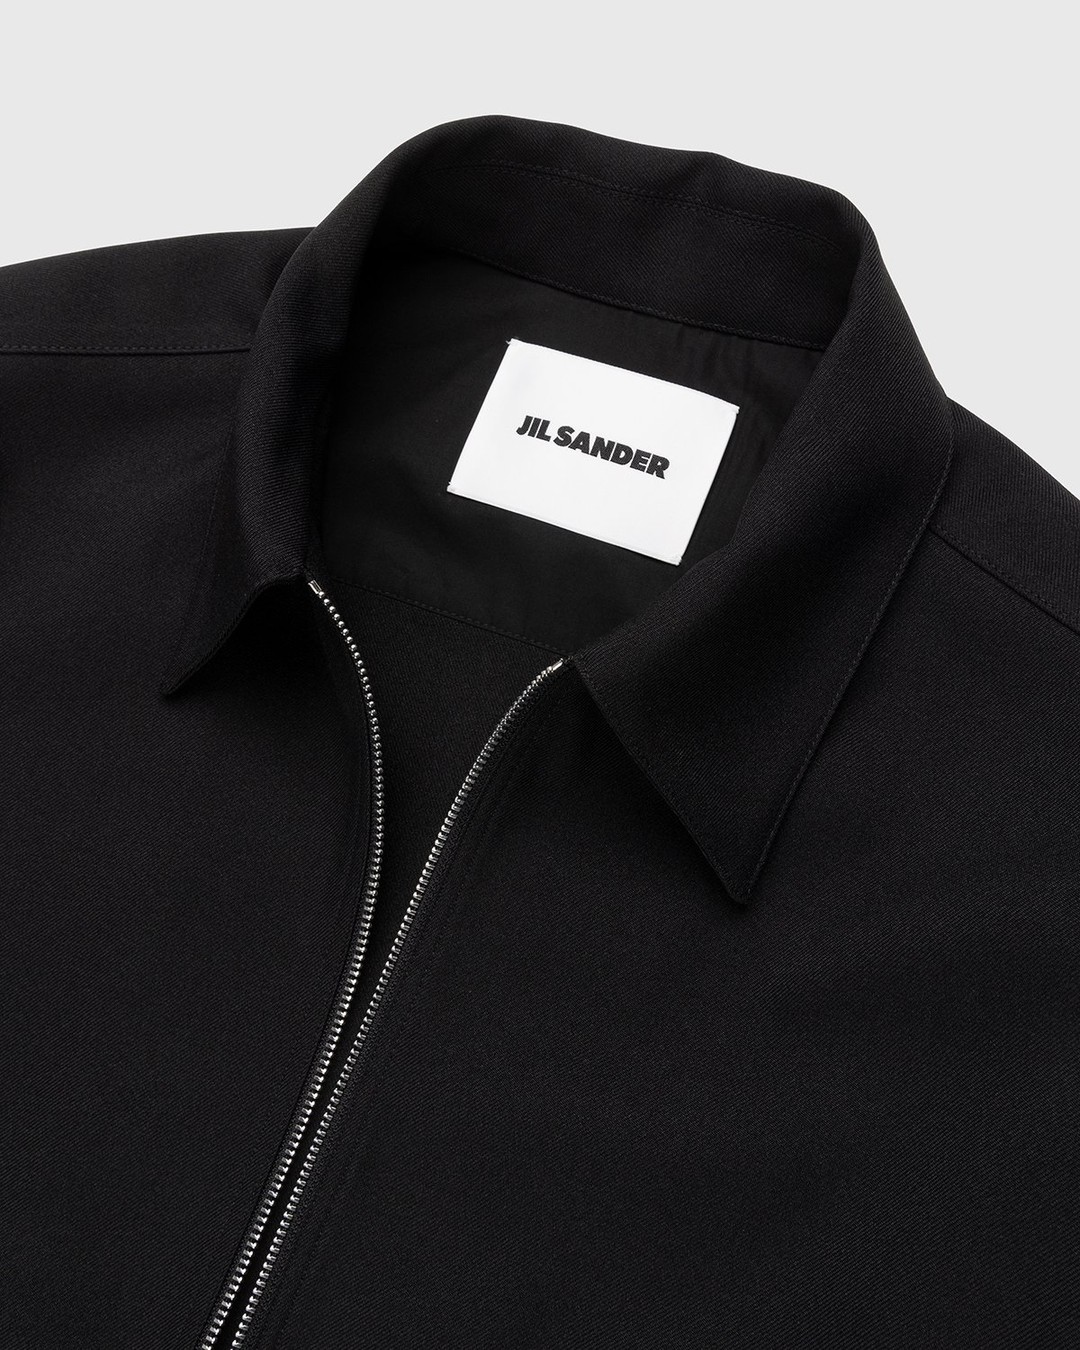 Jil Sander – Full Zip Shirt Black - Longsleeve Shirts - Black - Image 5